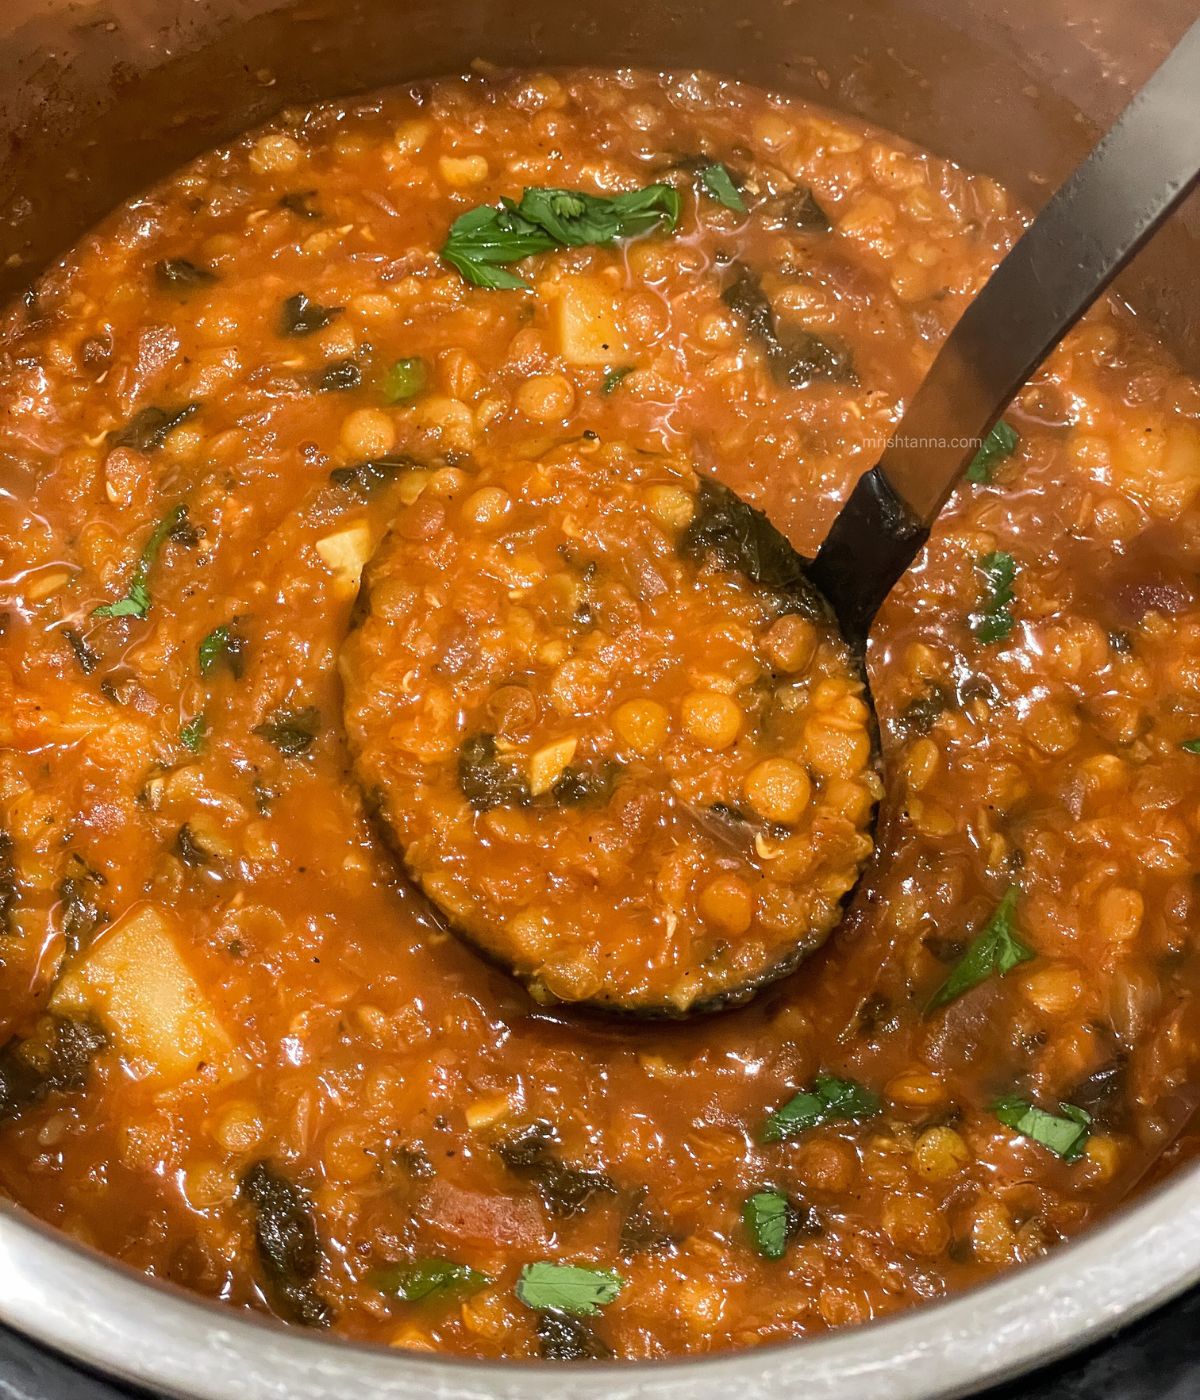 A ladle is full of vegan lentil soup.